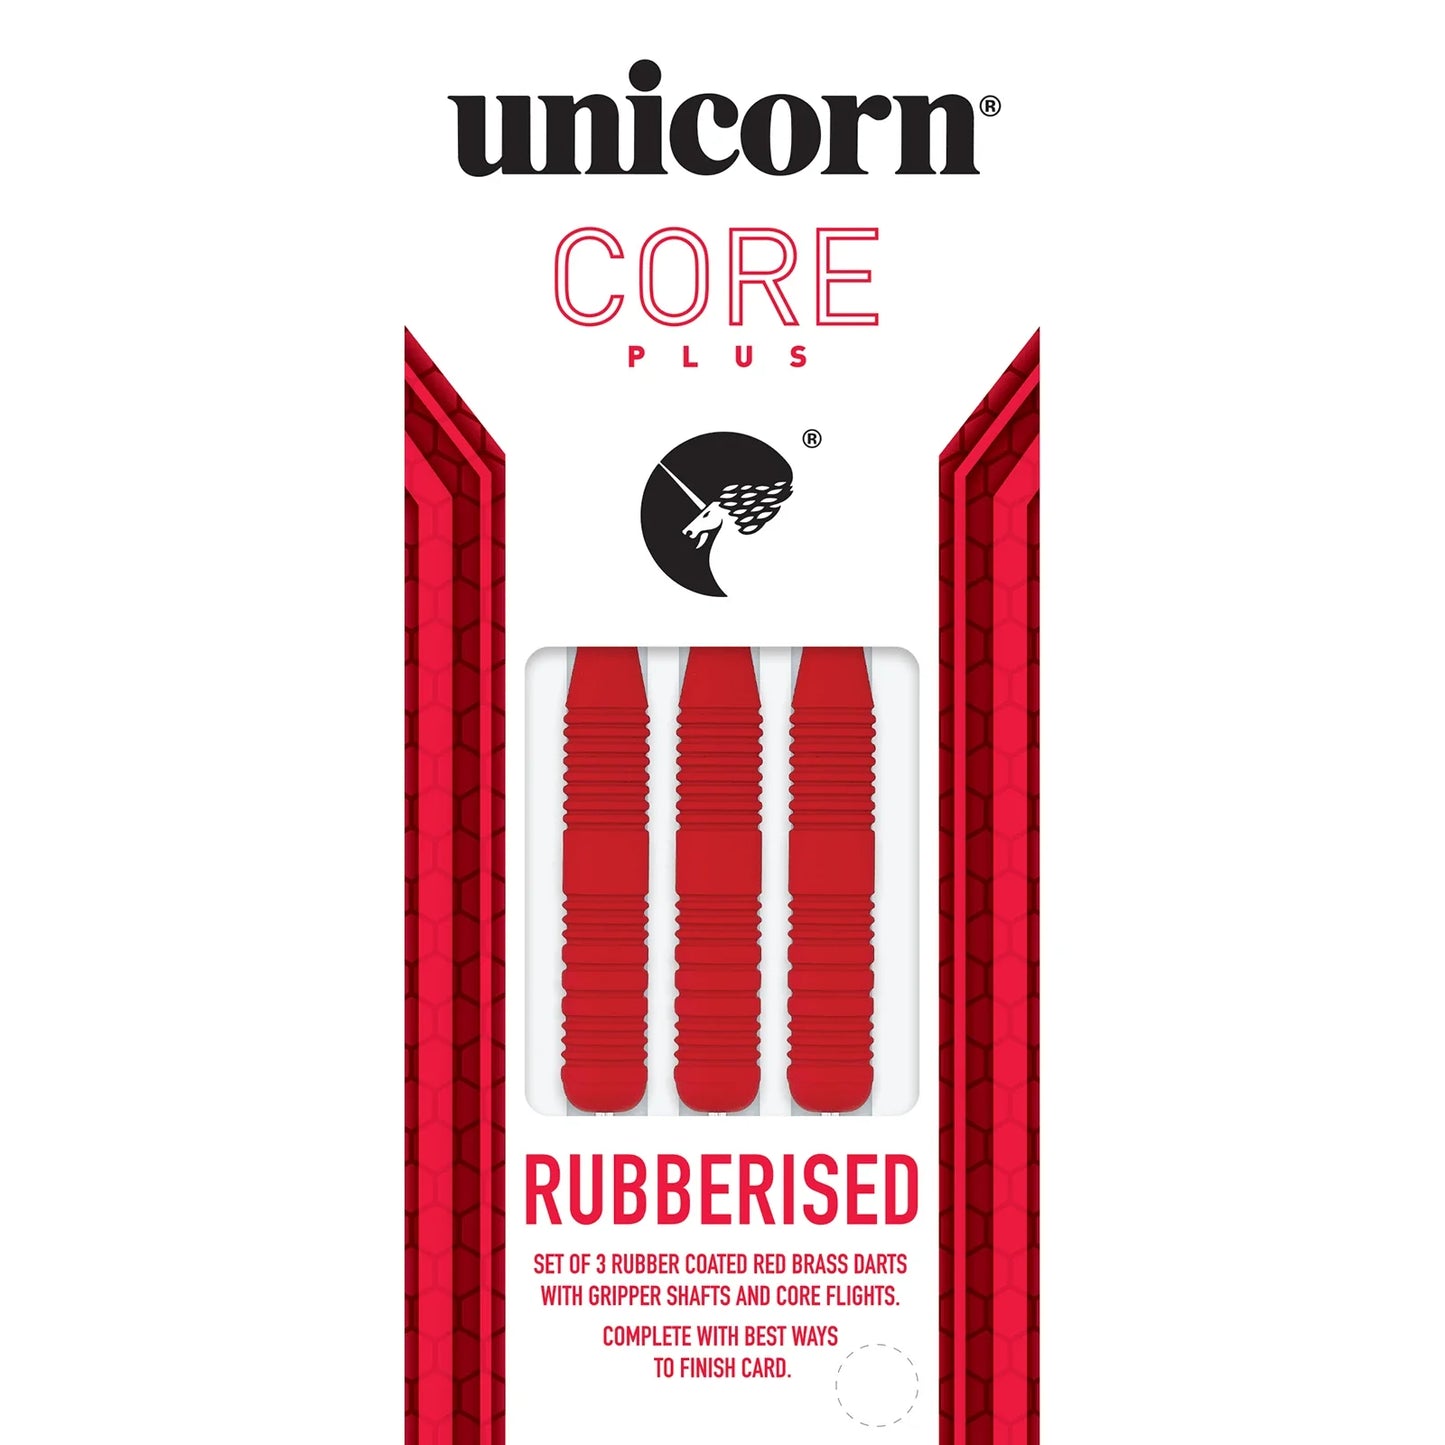 Unicorn Core Plus Rubberised Red 21g Darts